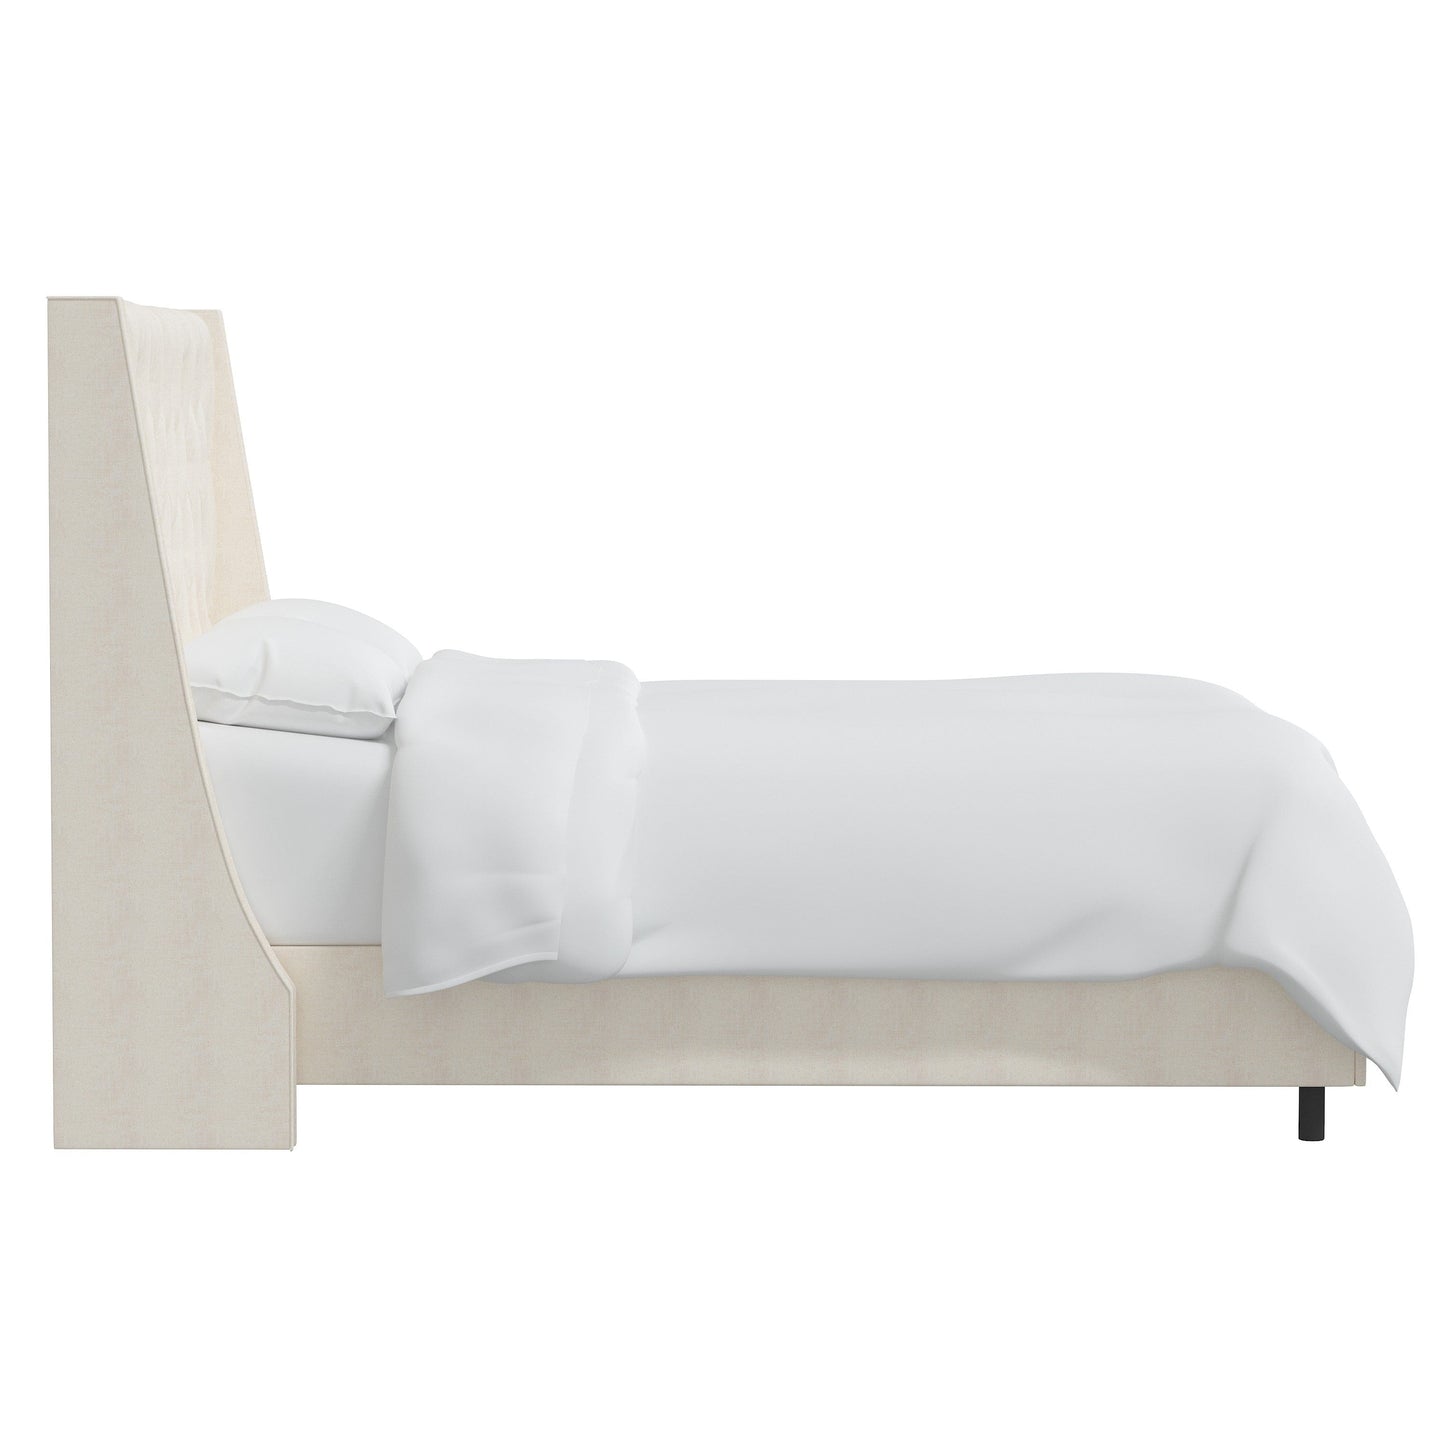 Skyline Furniture Twin Loomis Tufted Wingback Bed in Zuma Charcoal